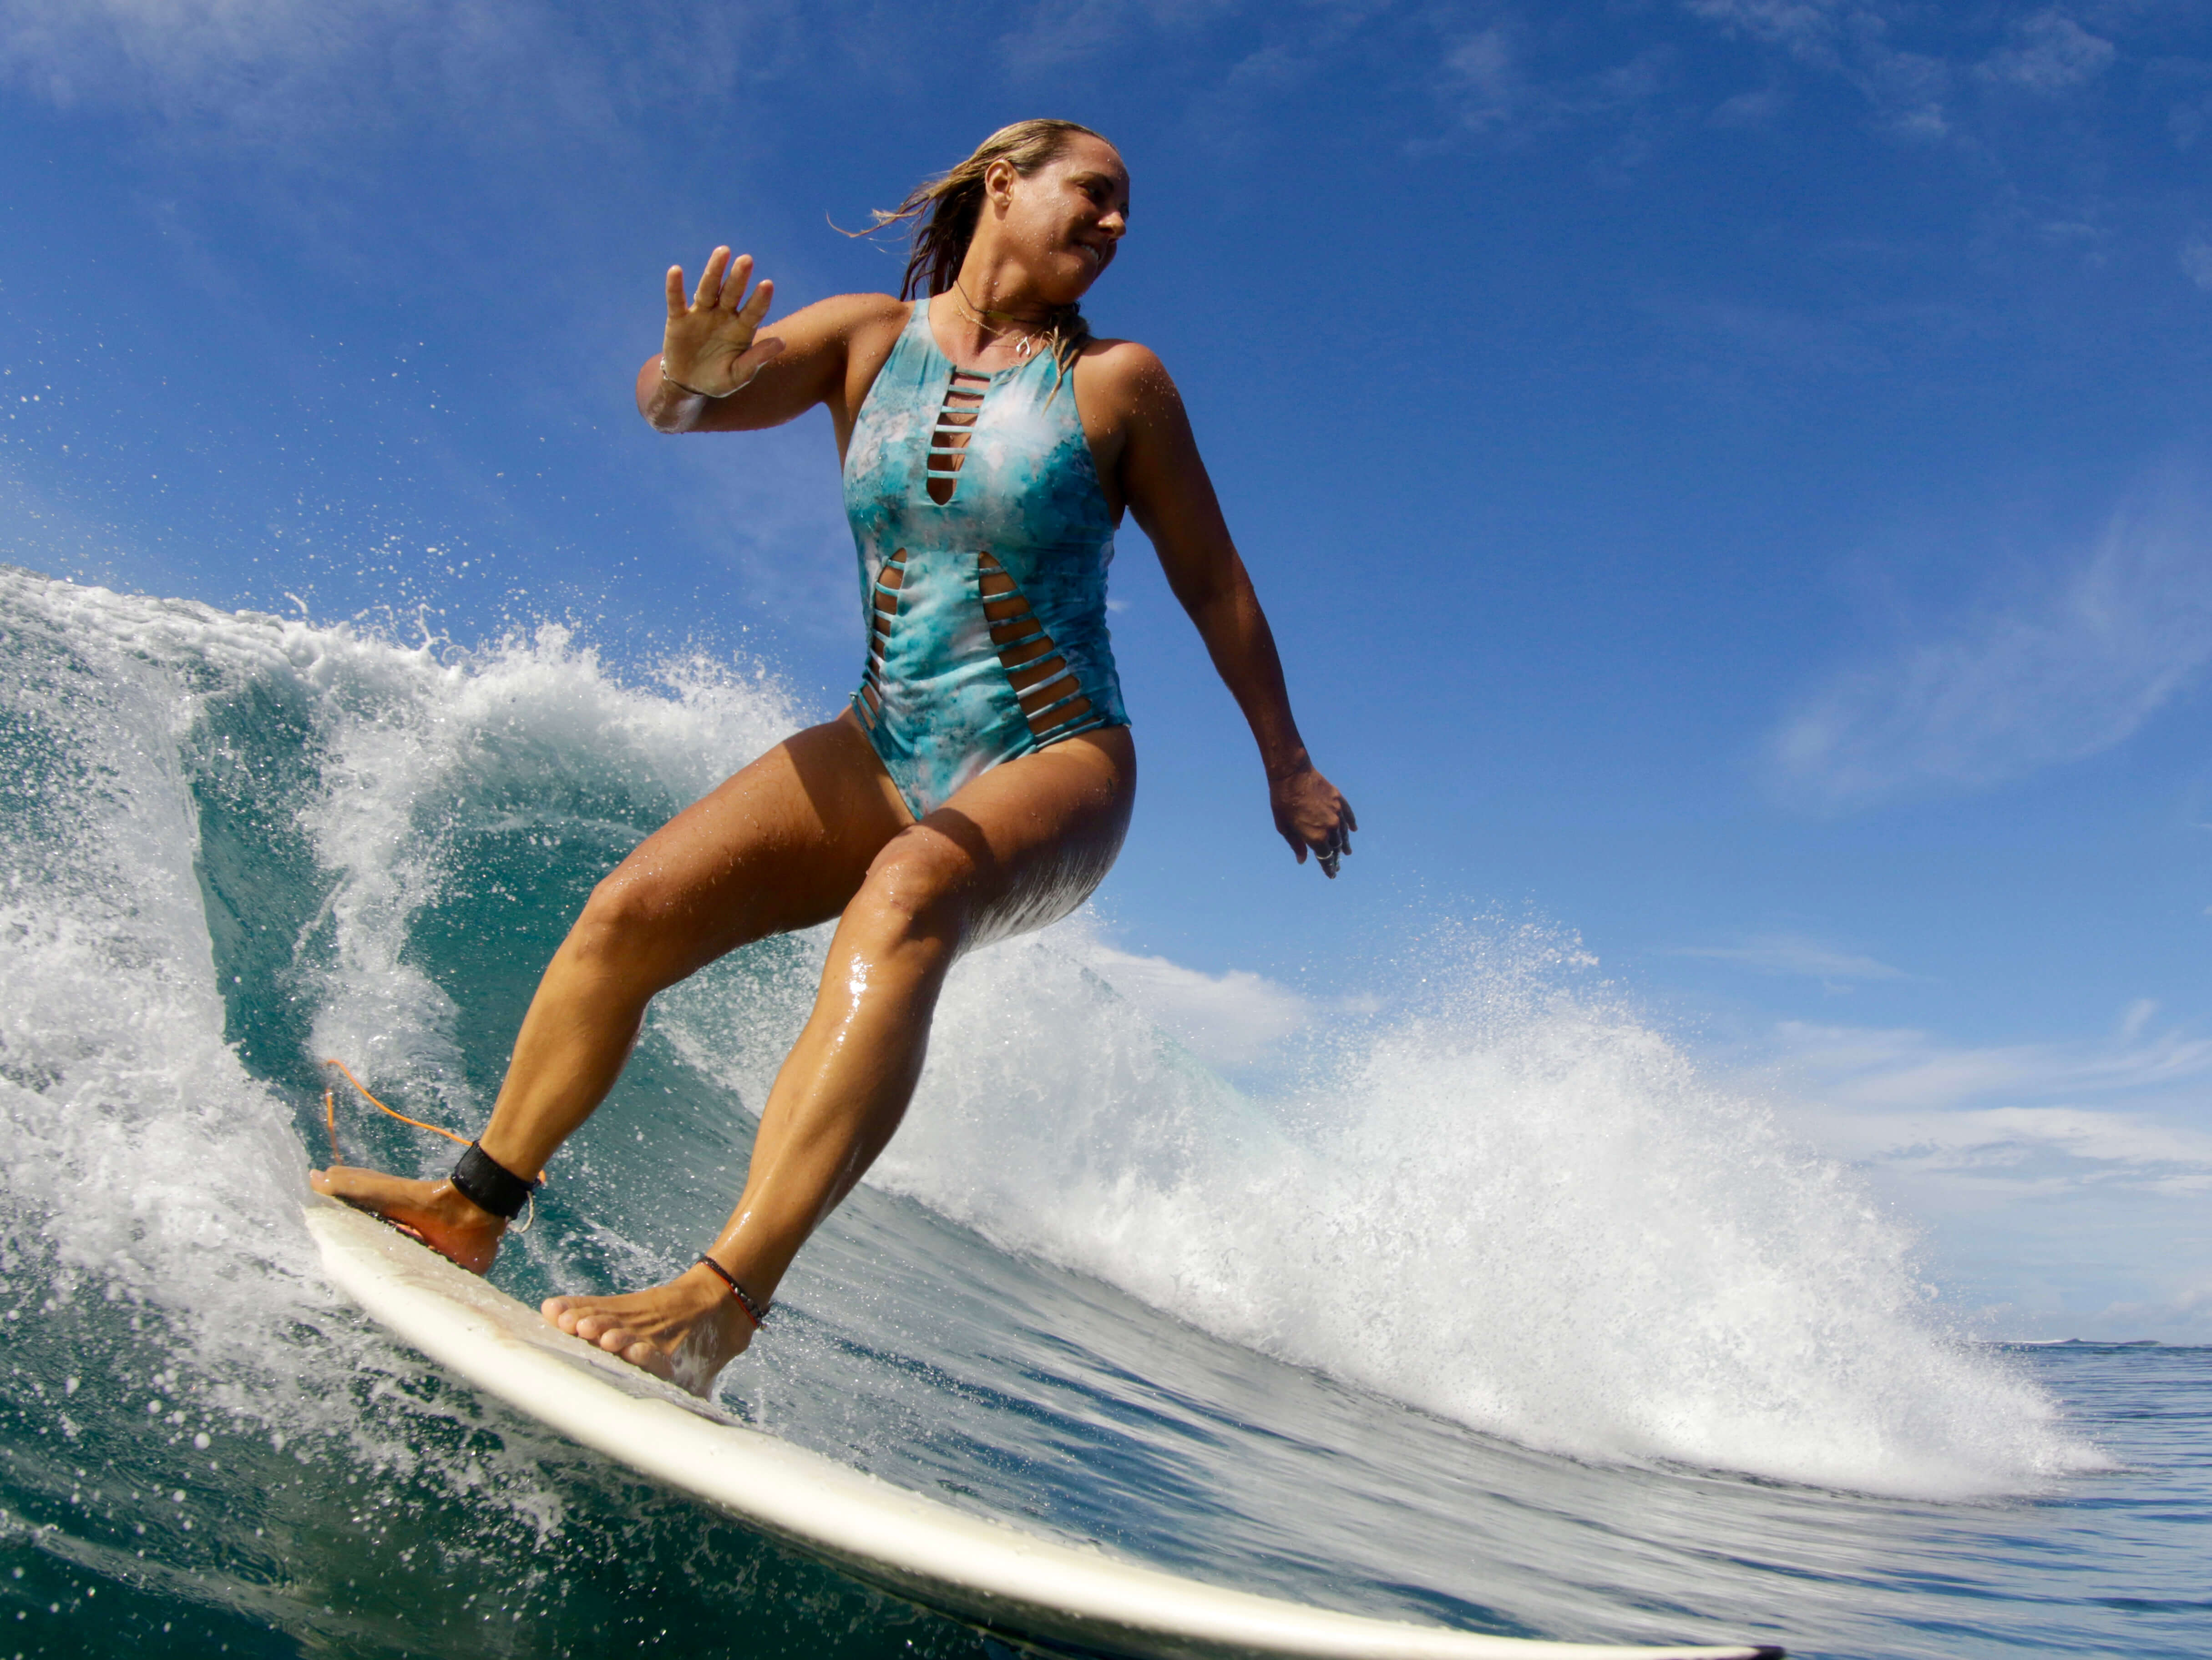 Стресс серфинг. Серфинг девушки. Дайвинг серфинг бикини красиво. Информационный серфер. Веб серфинг картинки.